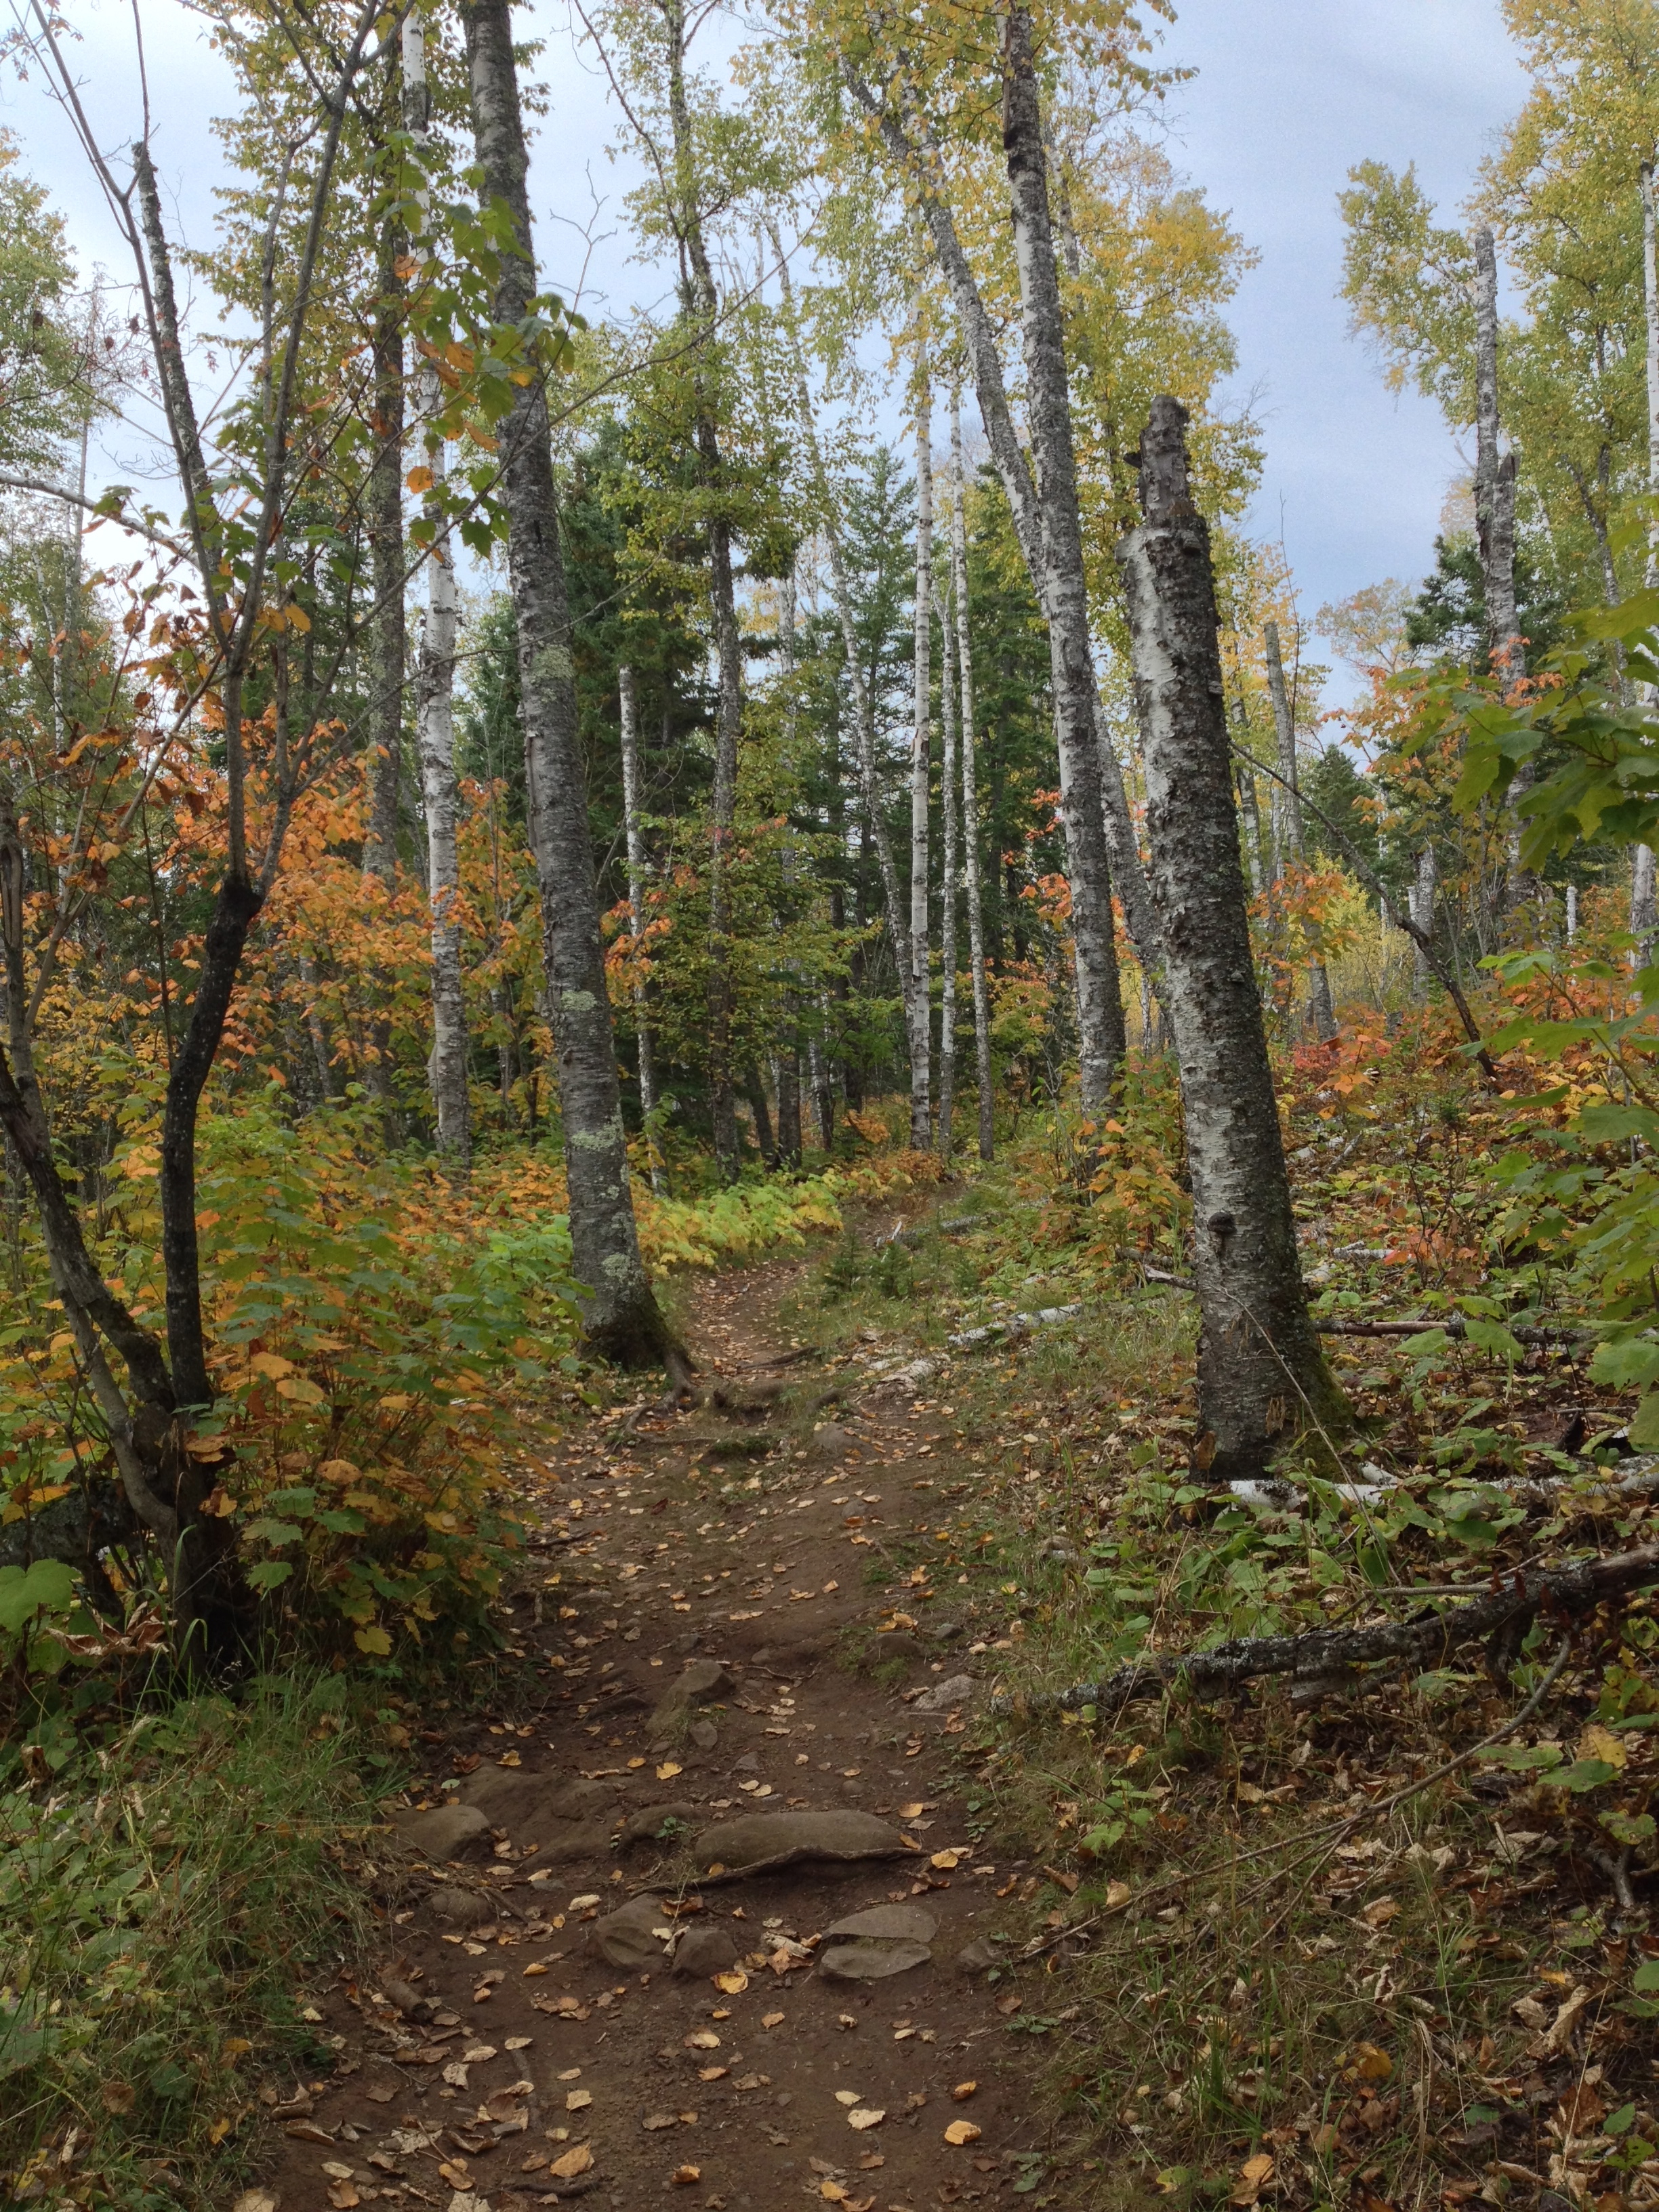  The Minnesota Hiking Club Trail at Cascade River State Park&nbsp; 